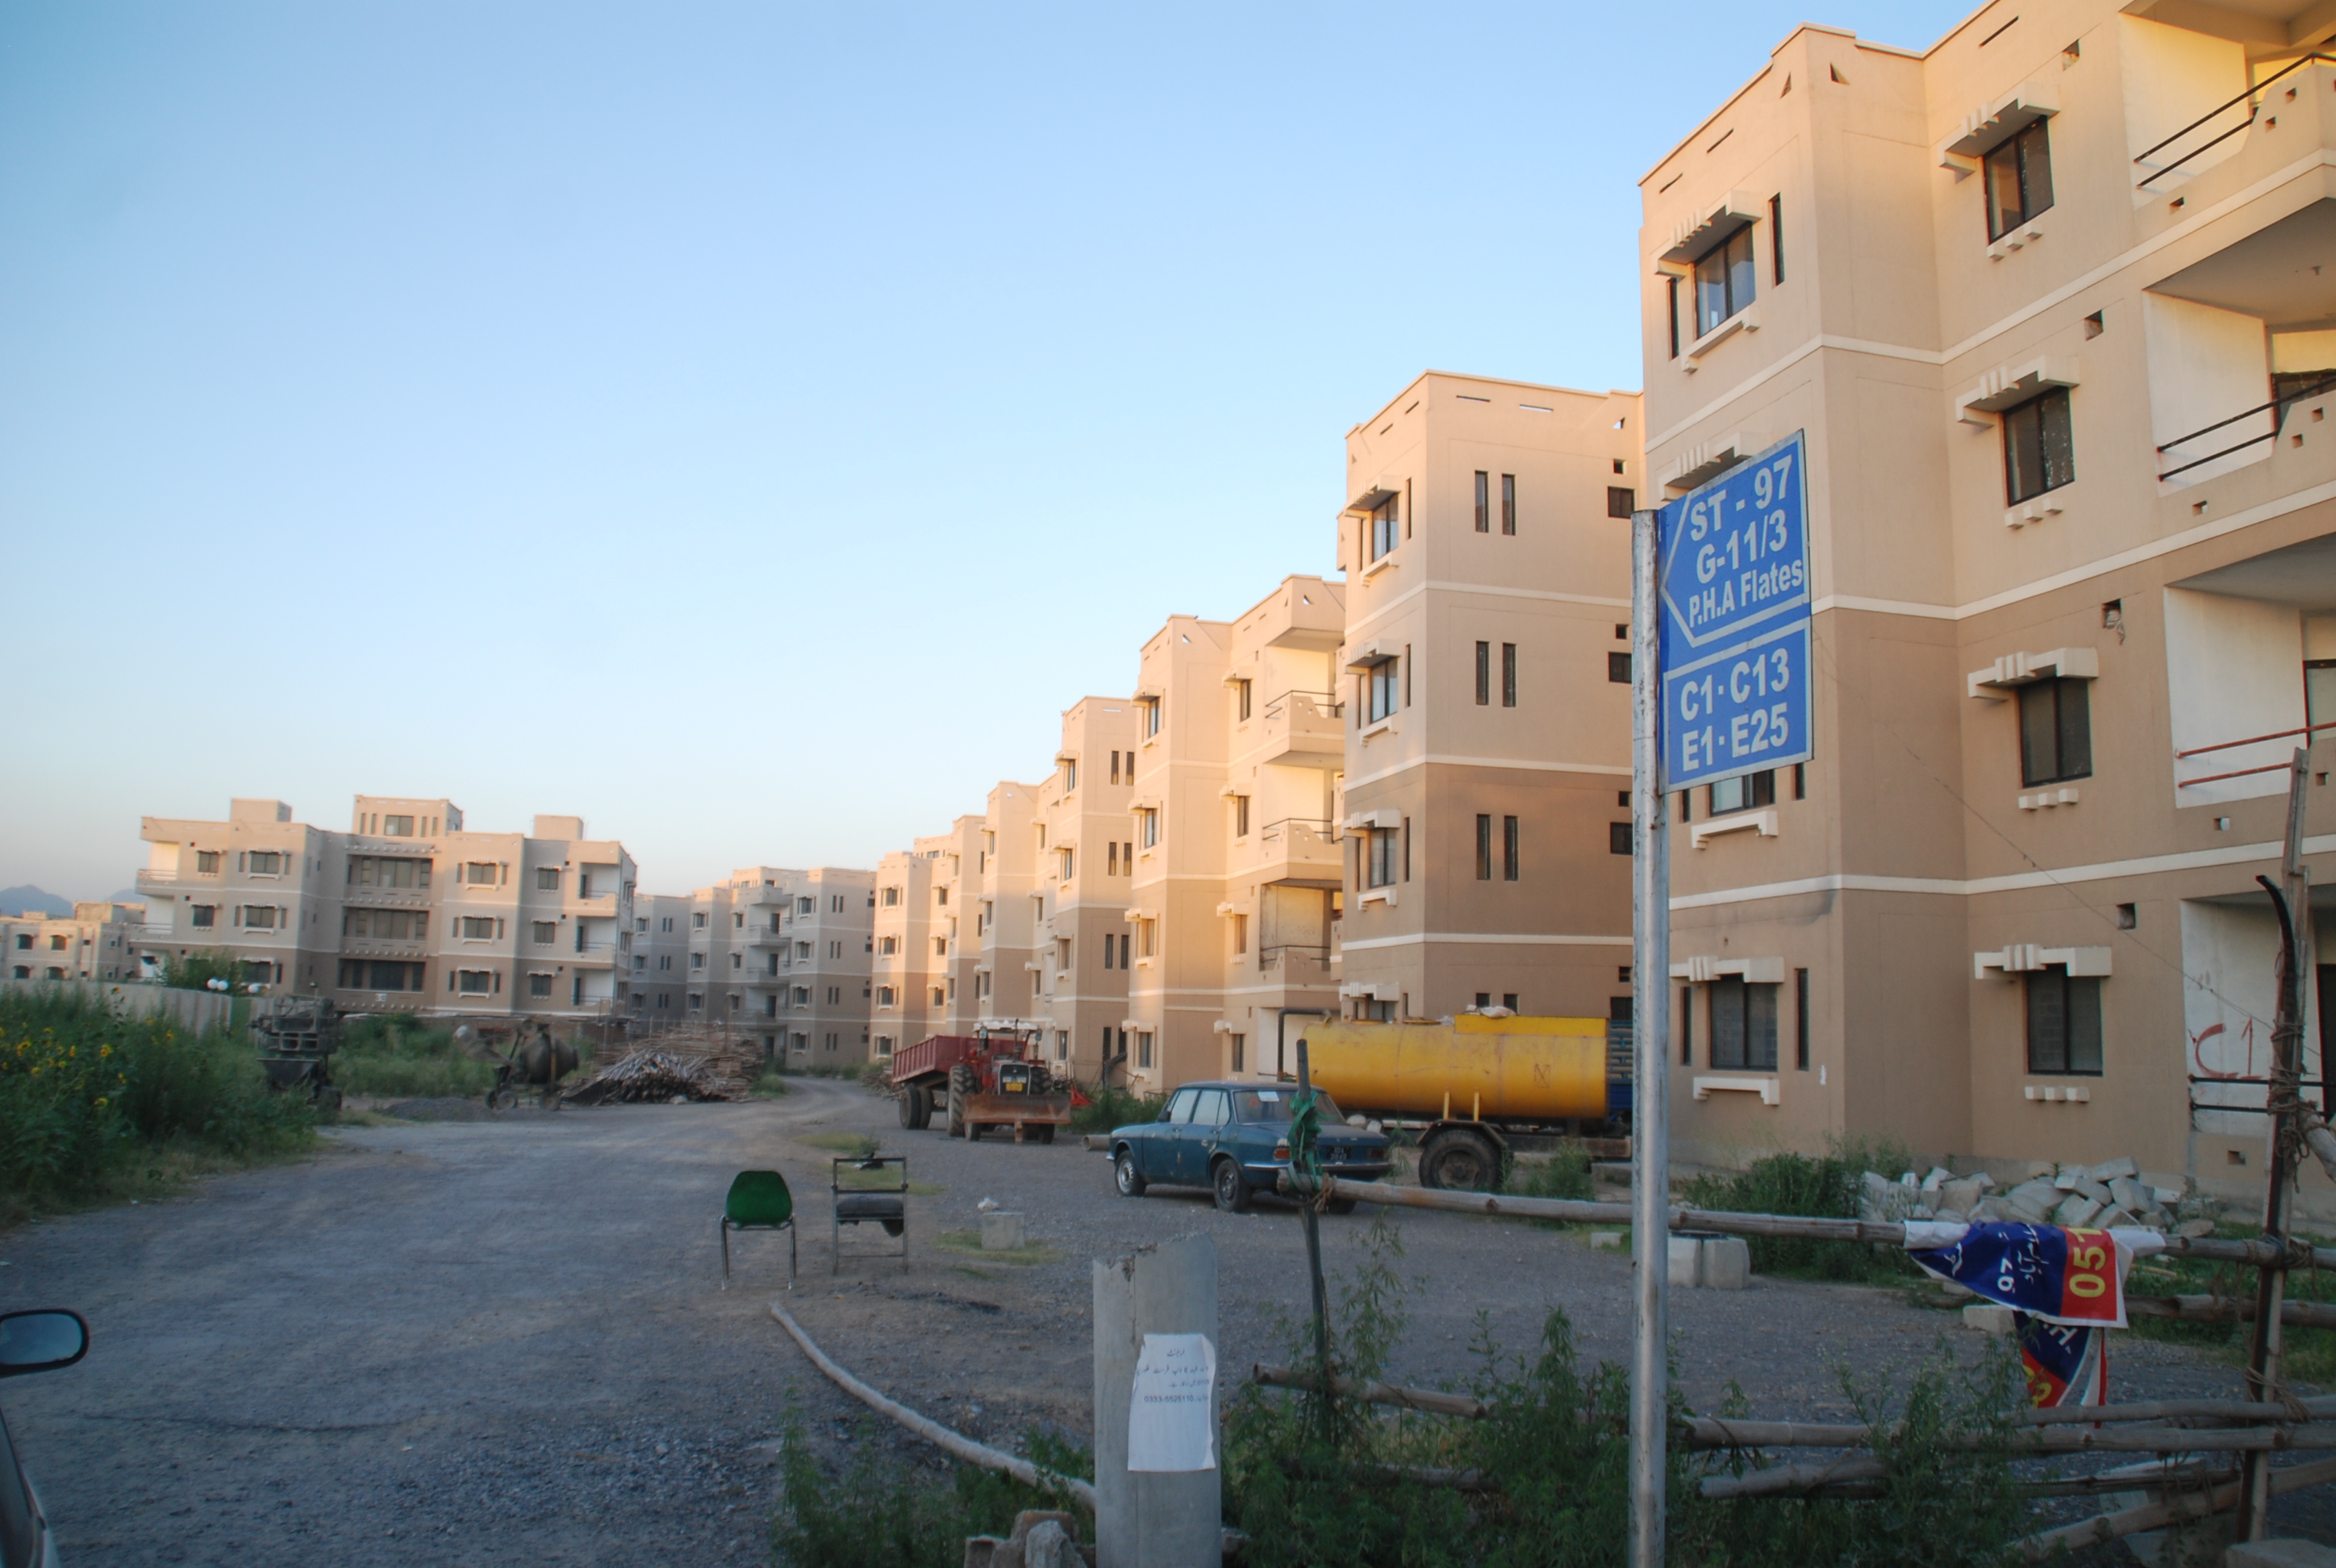 G-11/4 Apartments Islamabad